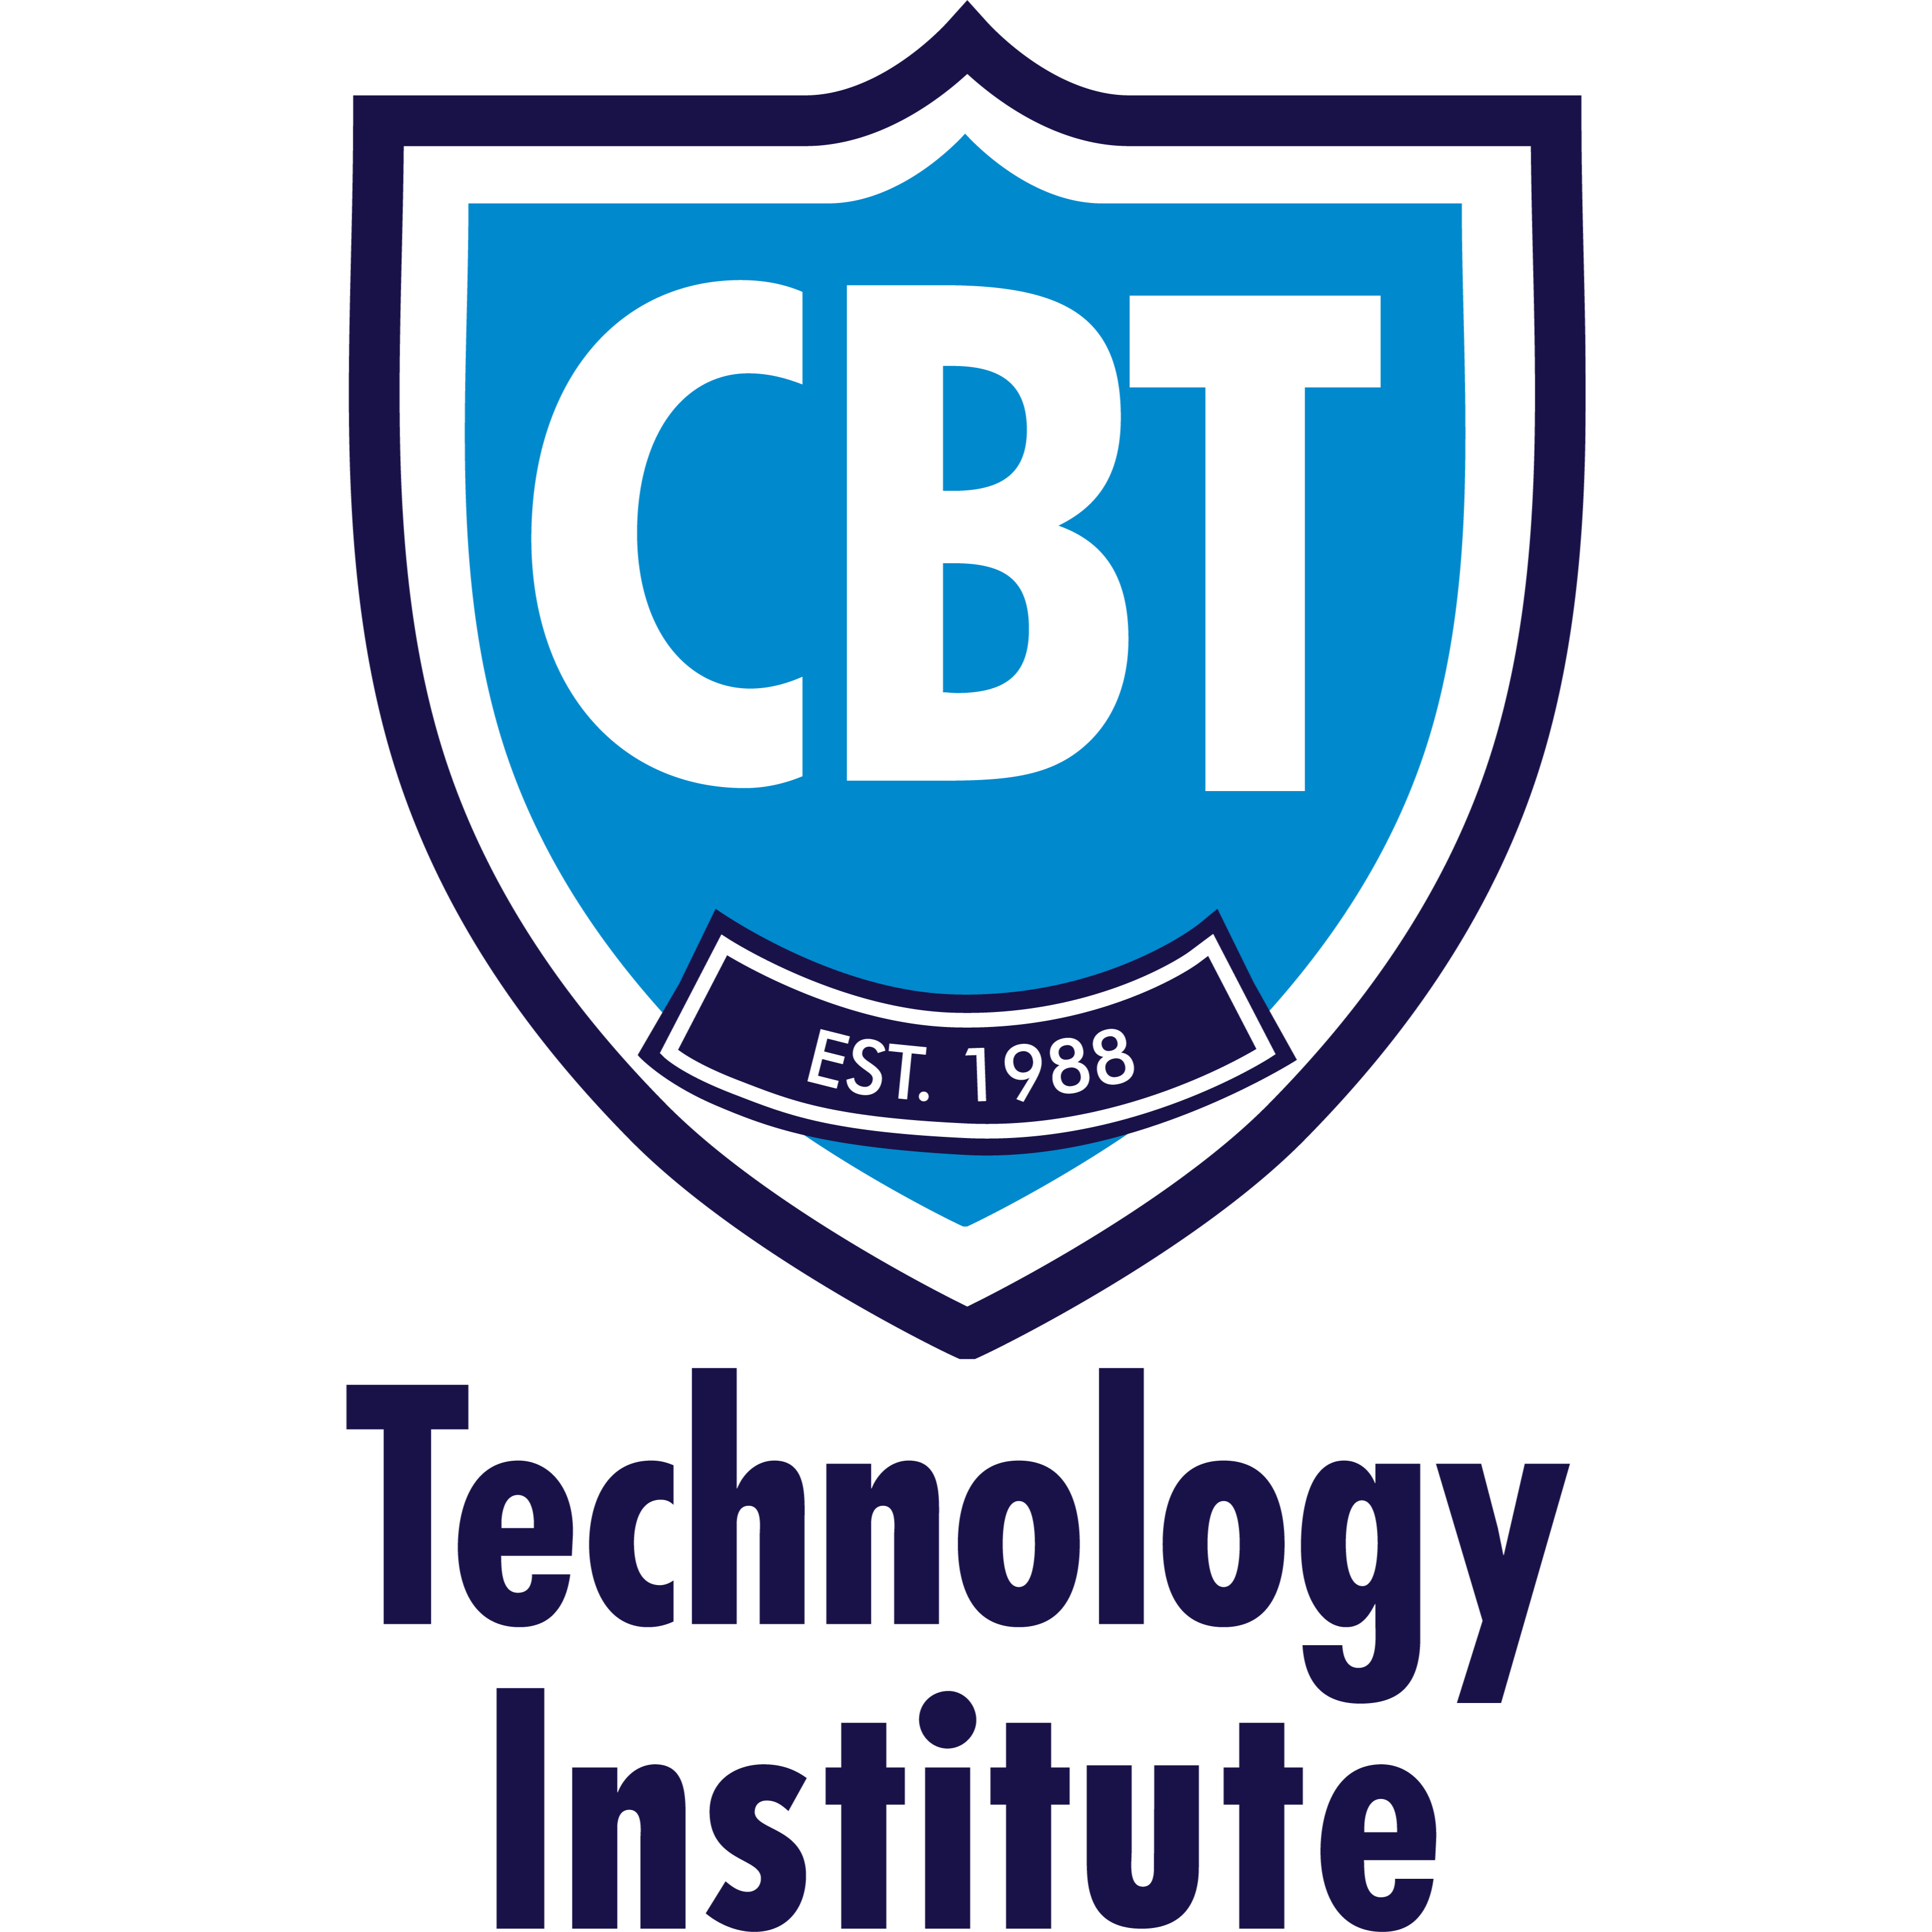 CBT Technology Institute – Cutler Bay Campus - Cutler Bay, FL 33157 - (786)464-5896 | ShowMeLocal.com